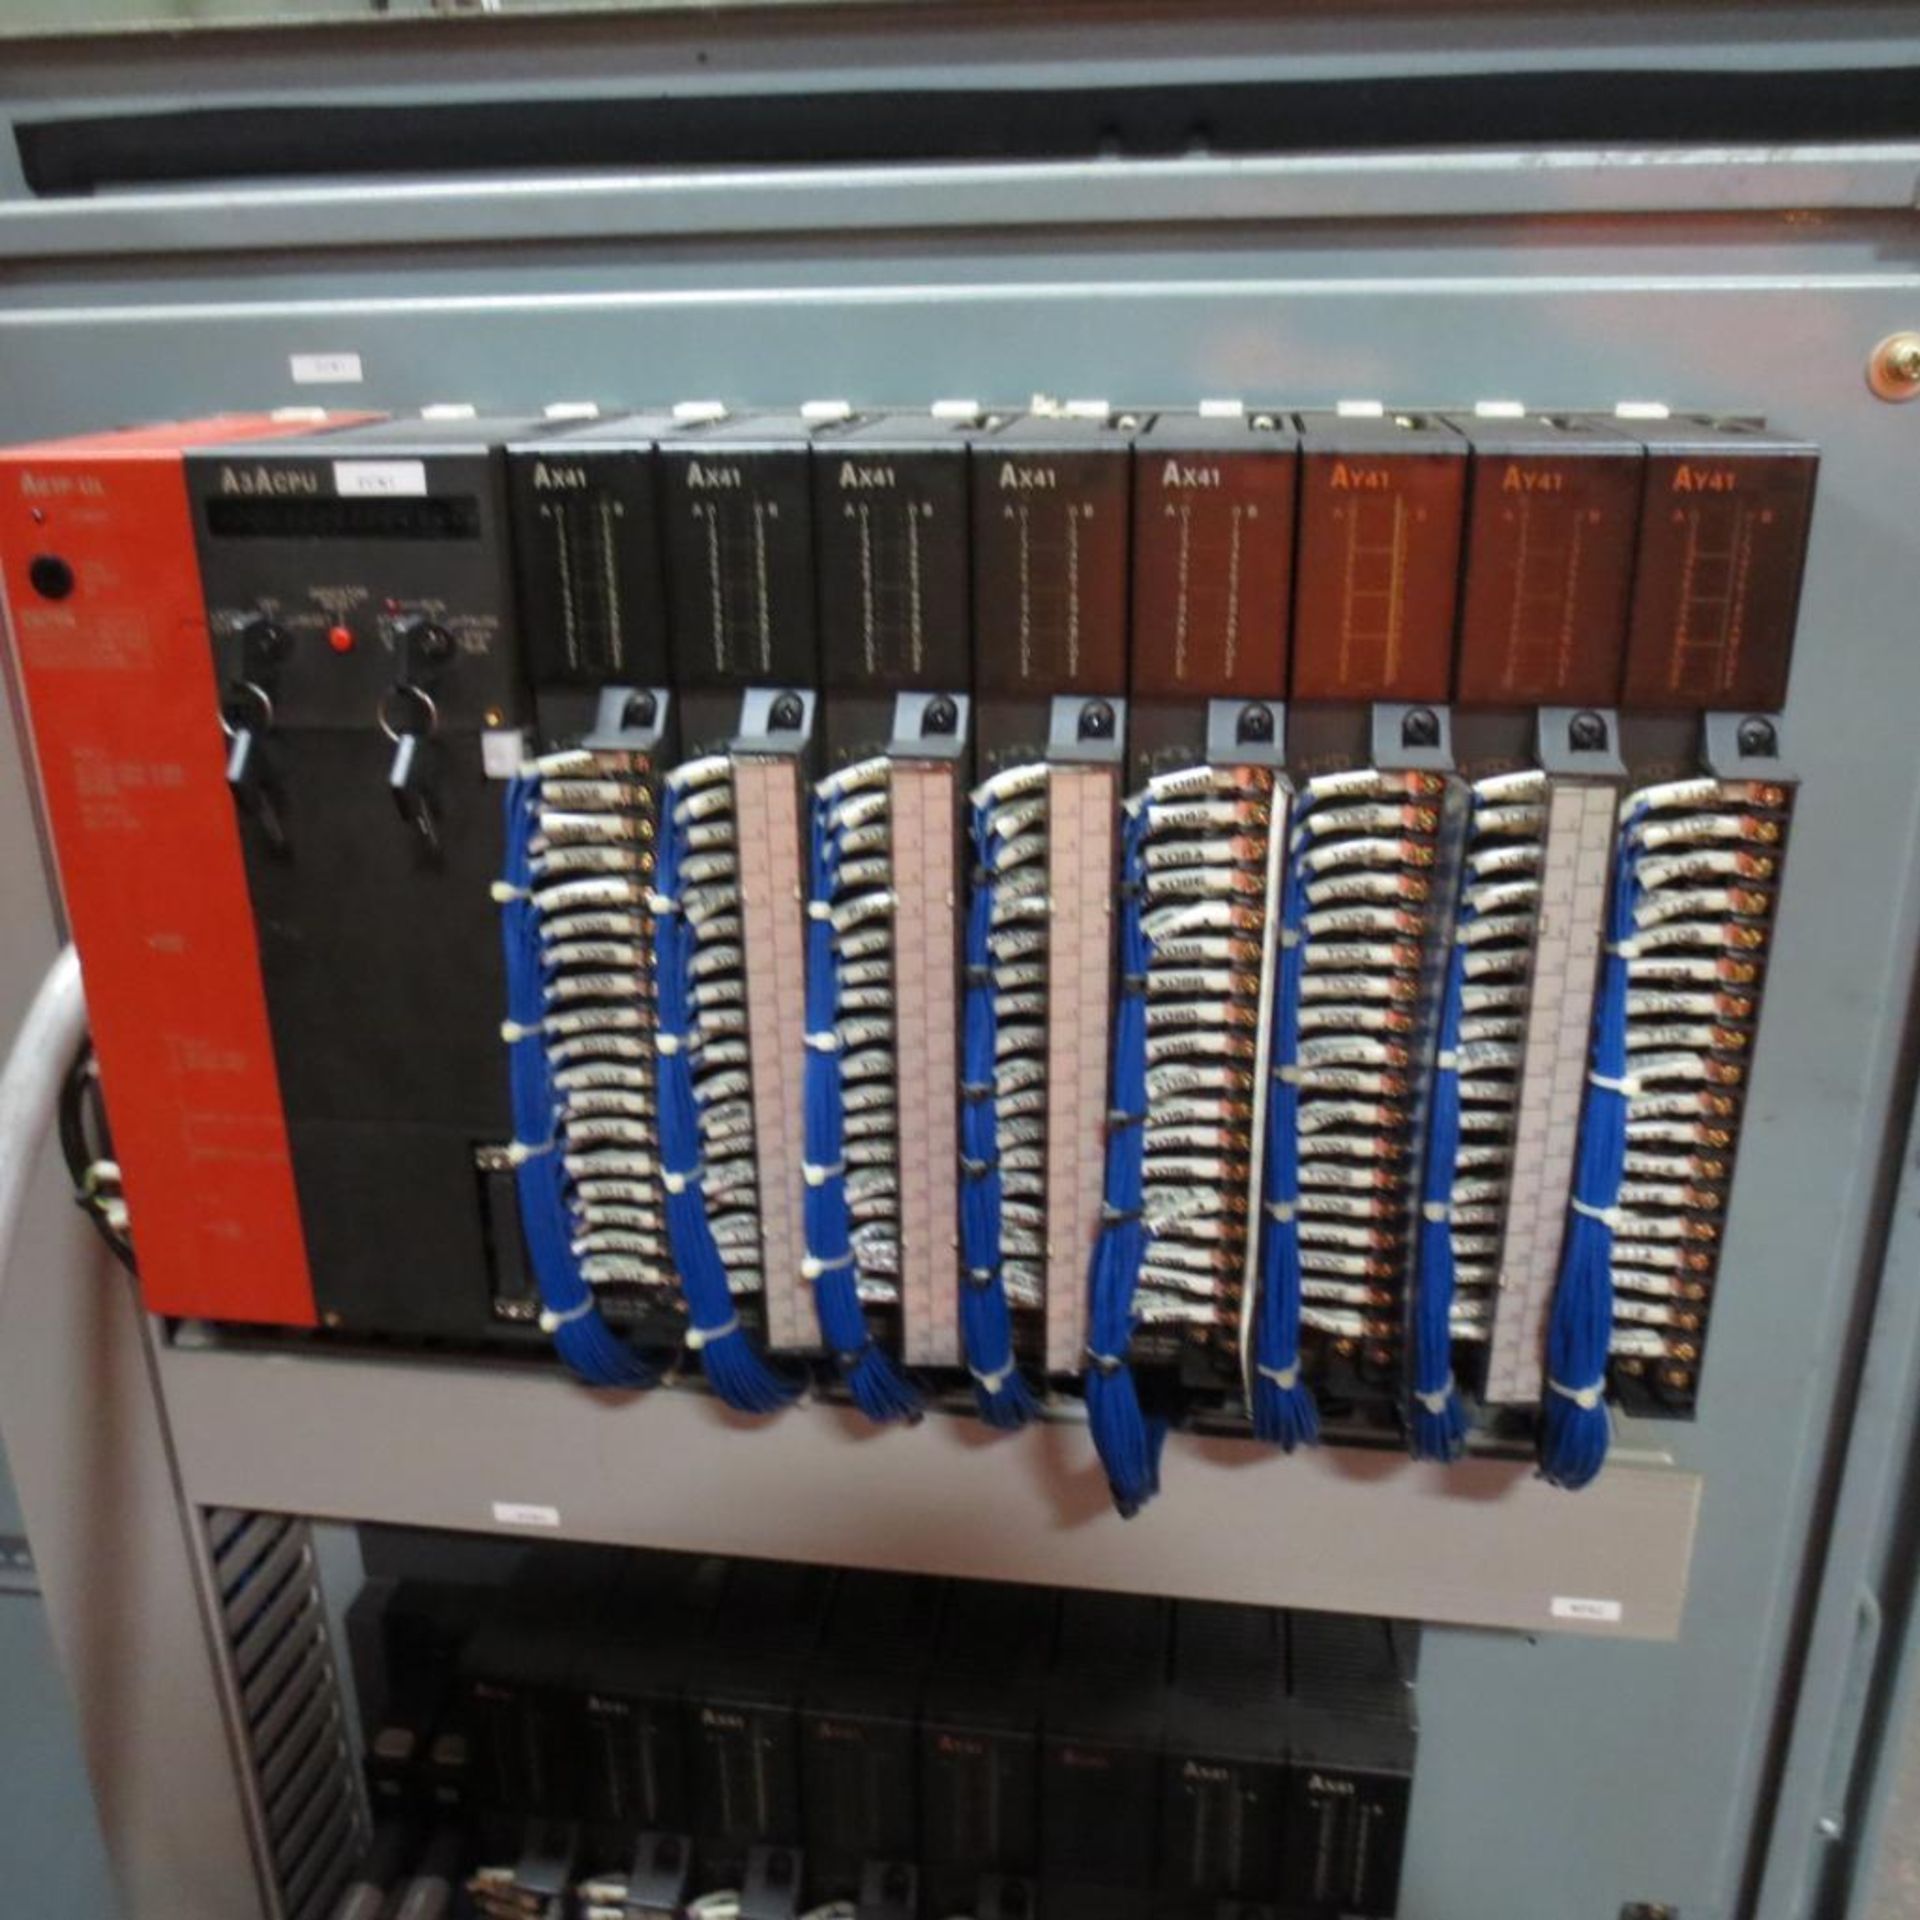 L/UL Module Control Cabinet. Loading Fee is $30.00 - Image 2 of 6